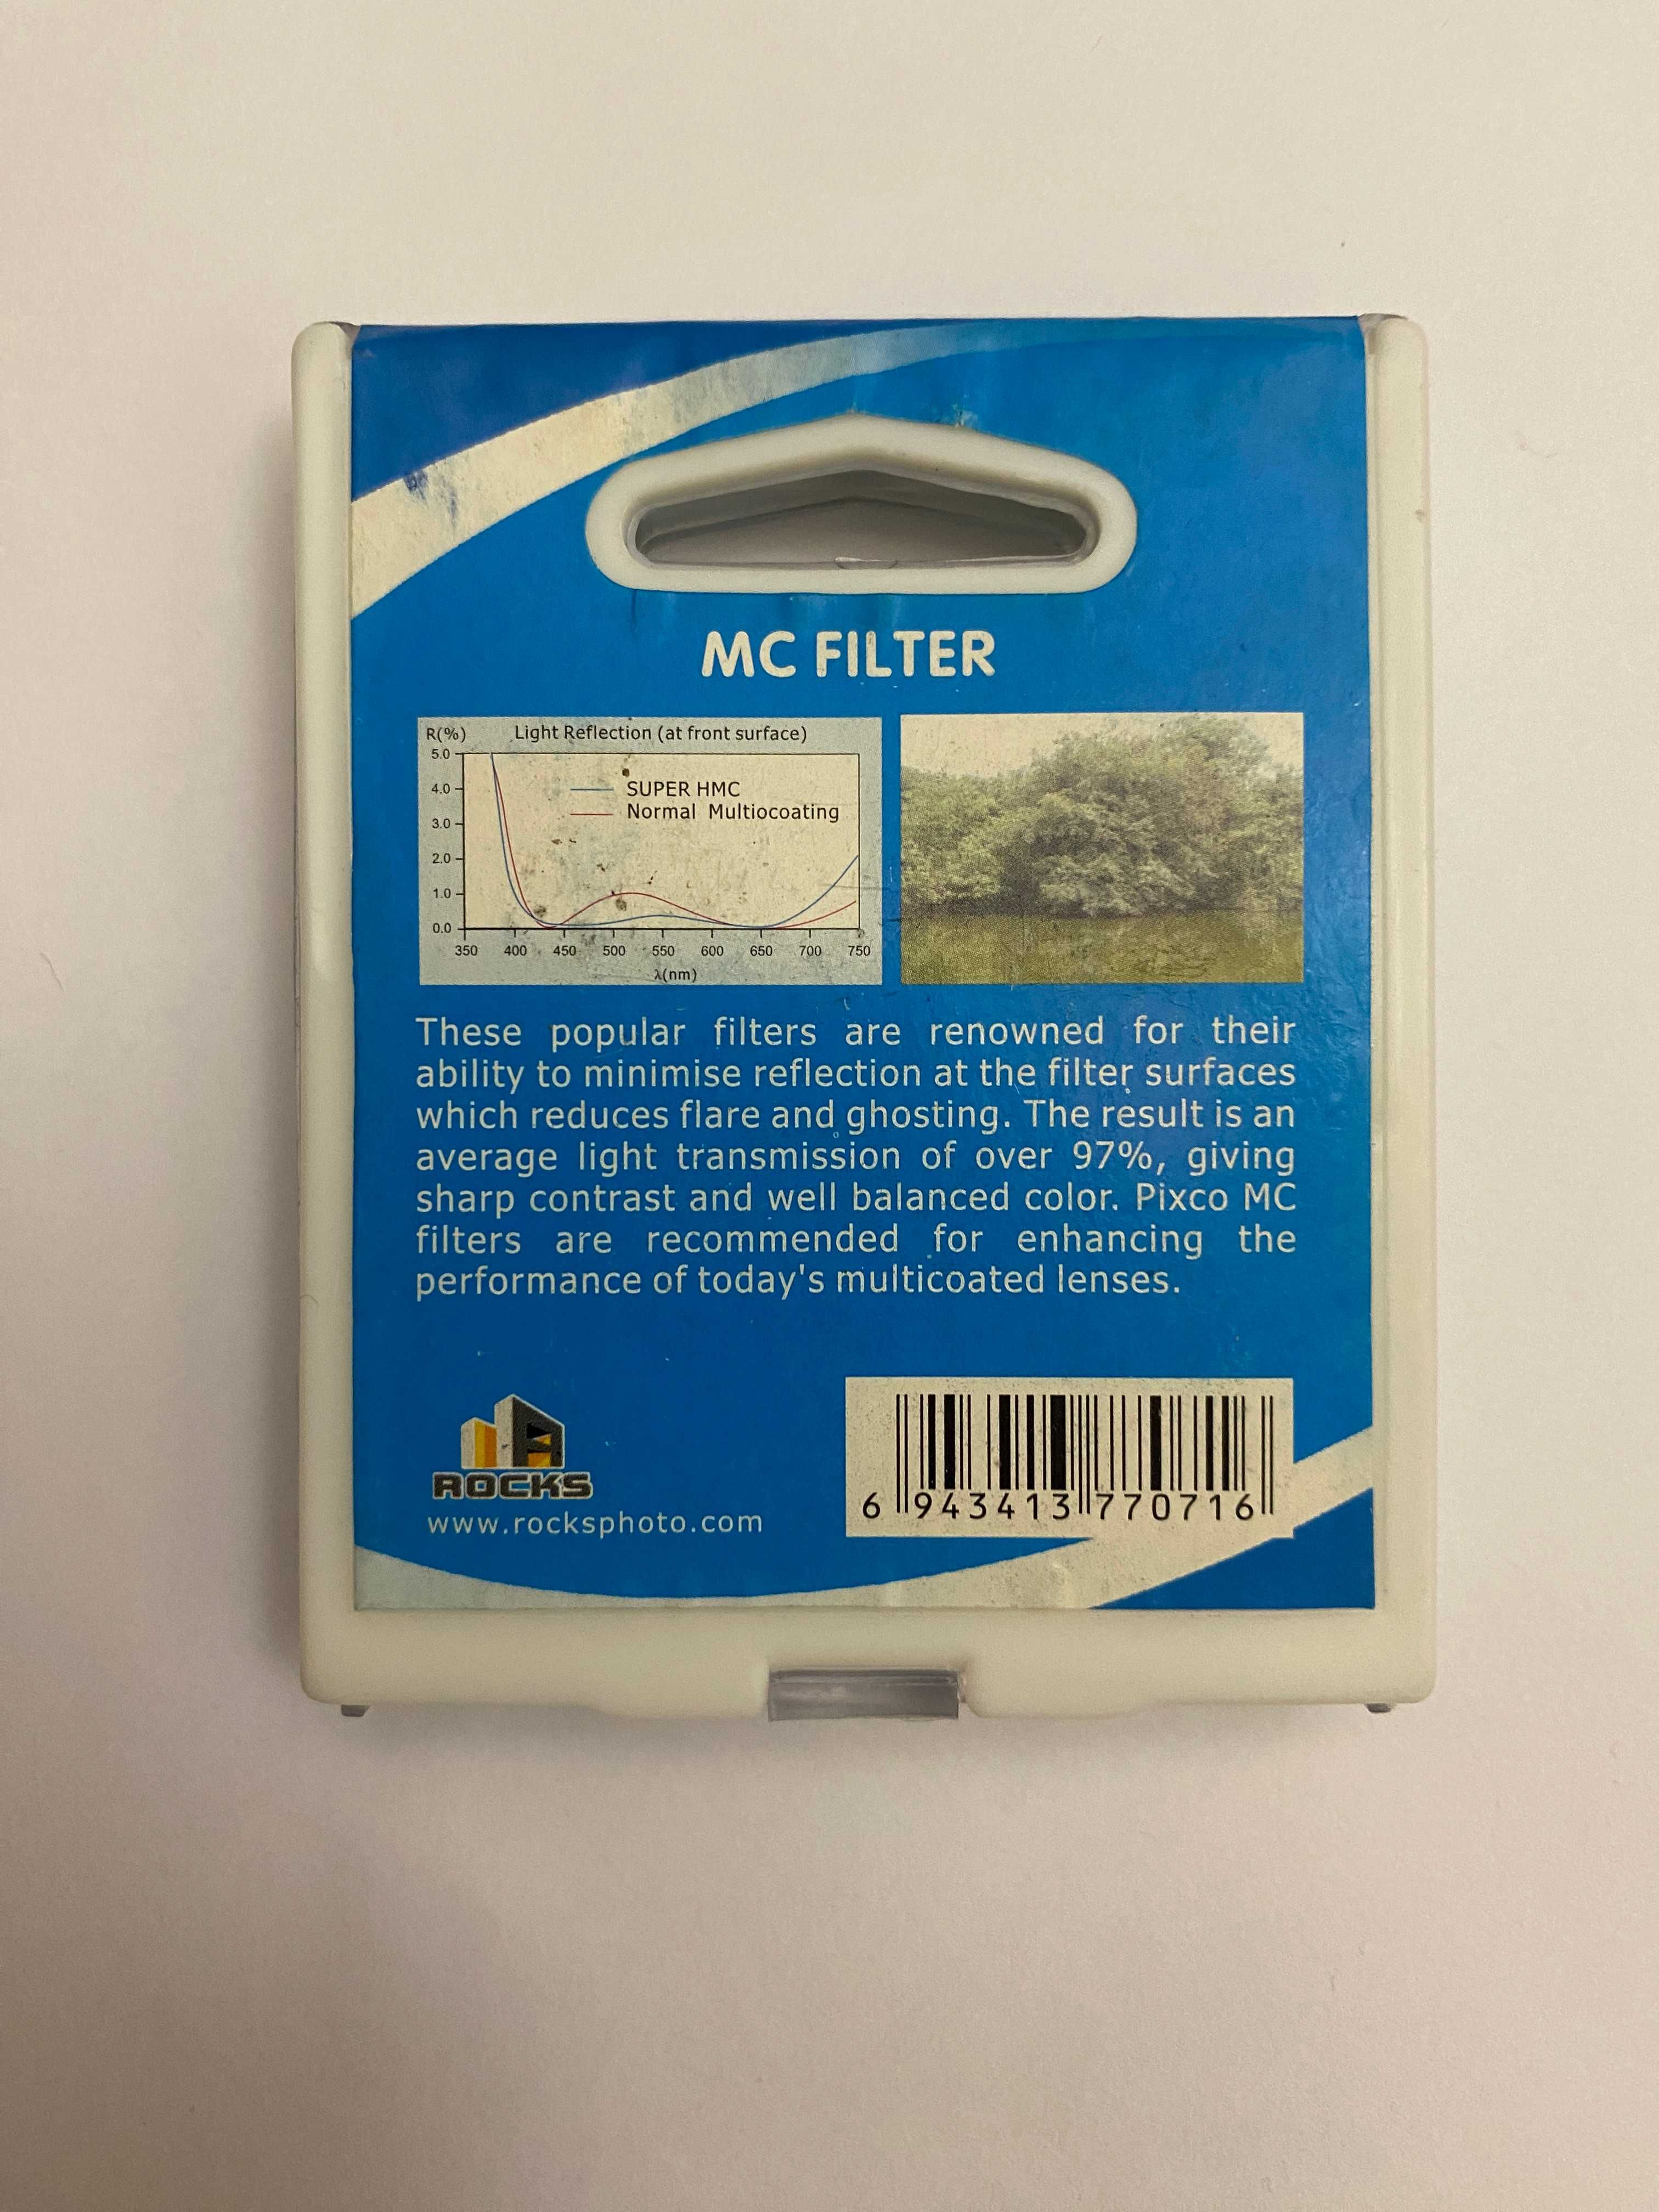 Filtr do obiektywu Pixico Mc FIlter 49mm